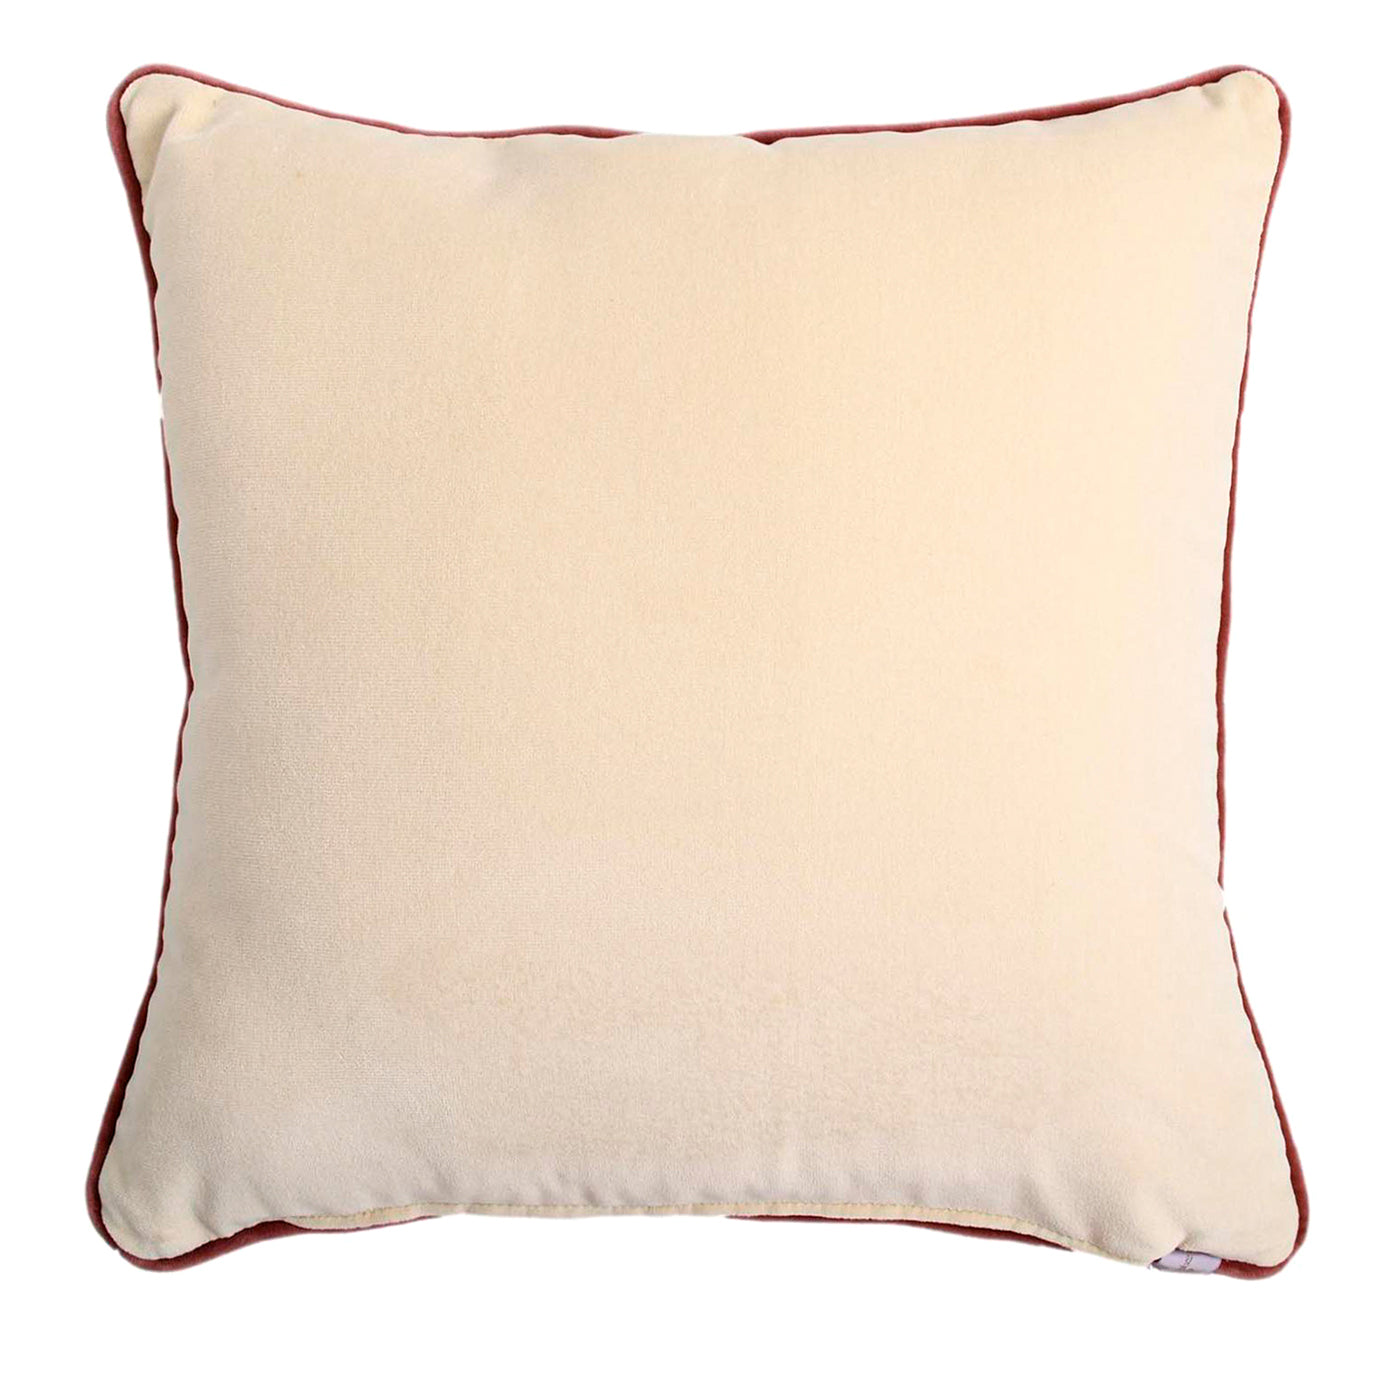 Square Carrè Cushion in Micro-Patterned jacquard fabric - Alternative view 1